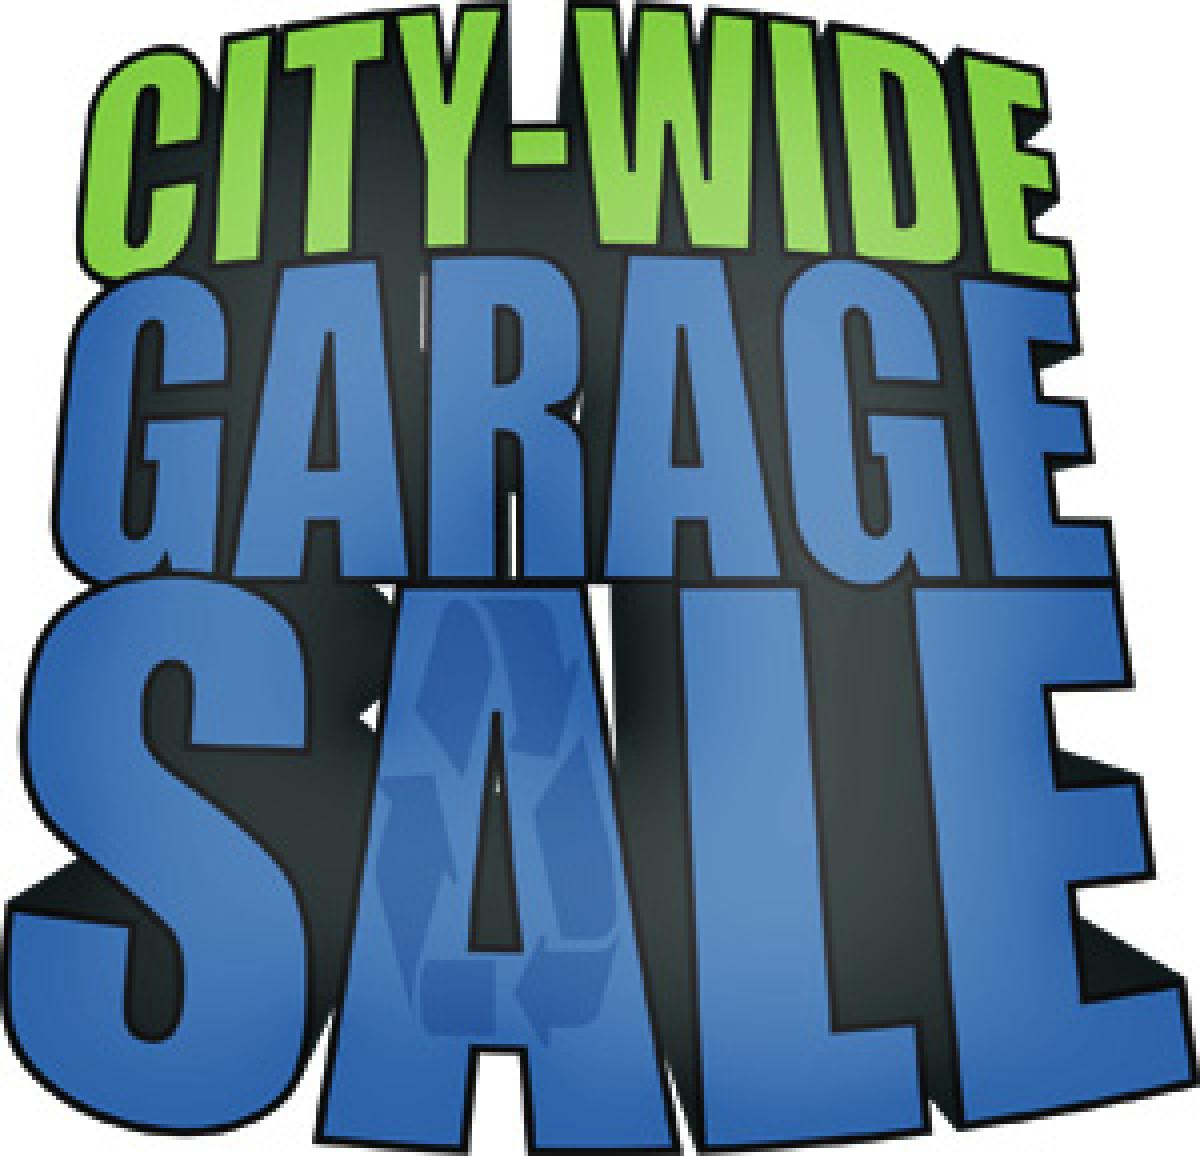 OK, Grove, City Wide Garage Sale, May 5-7th, 2017